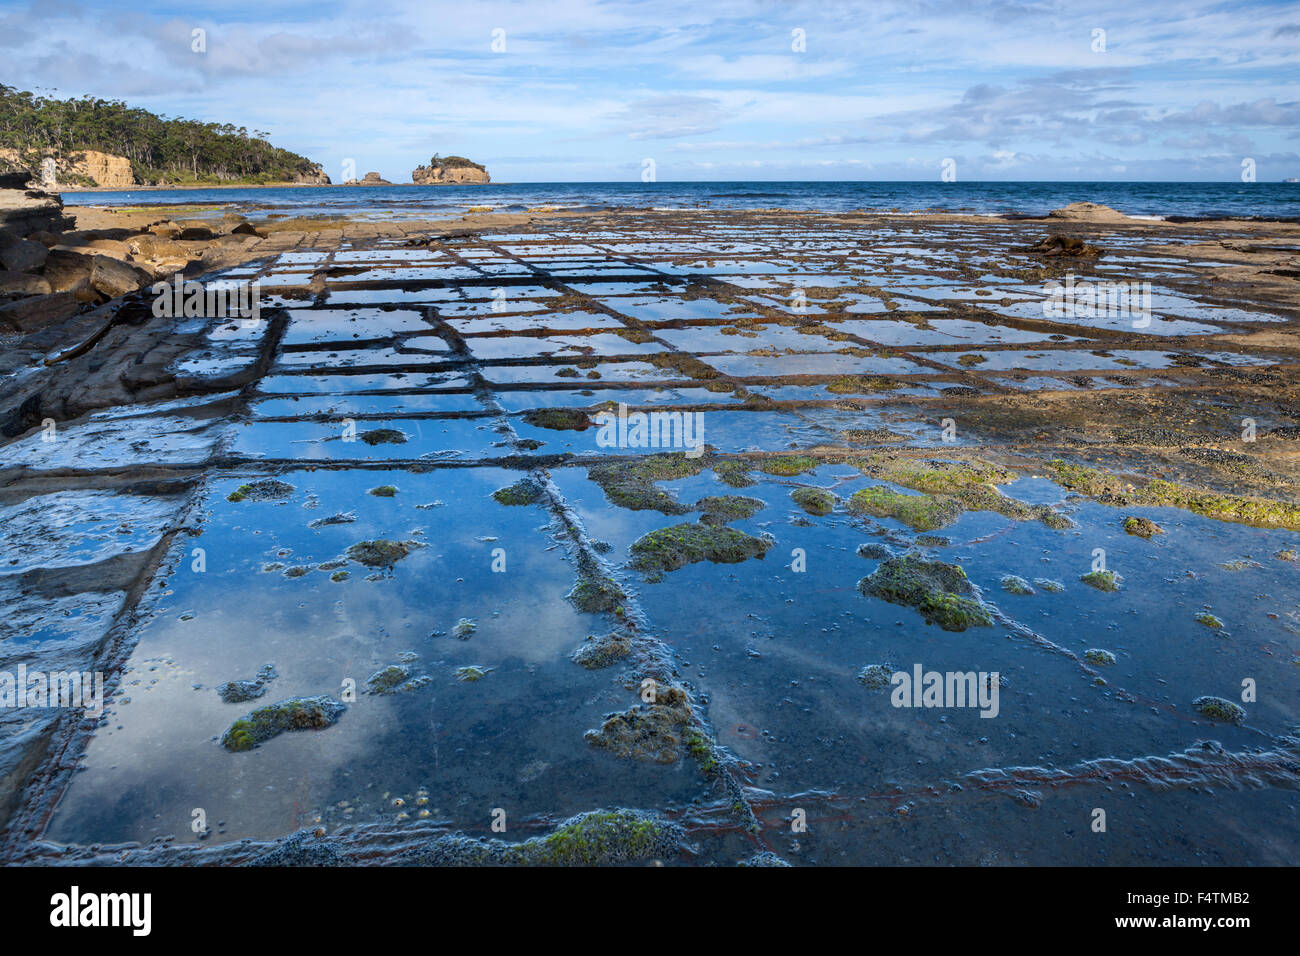 Pavimento a mosaico, Australia Tasmania, Penisola Tasmana, costa, rock, Cliff, Foto Stock